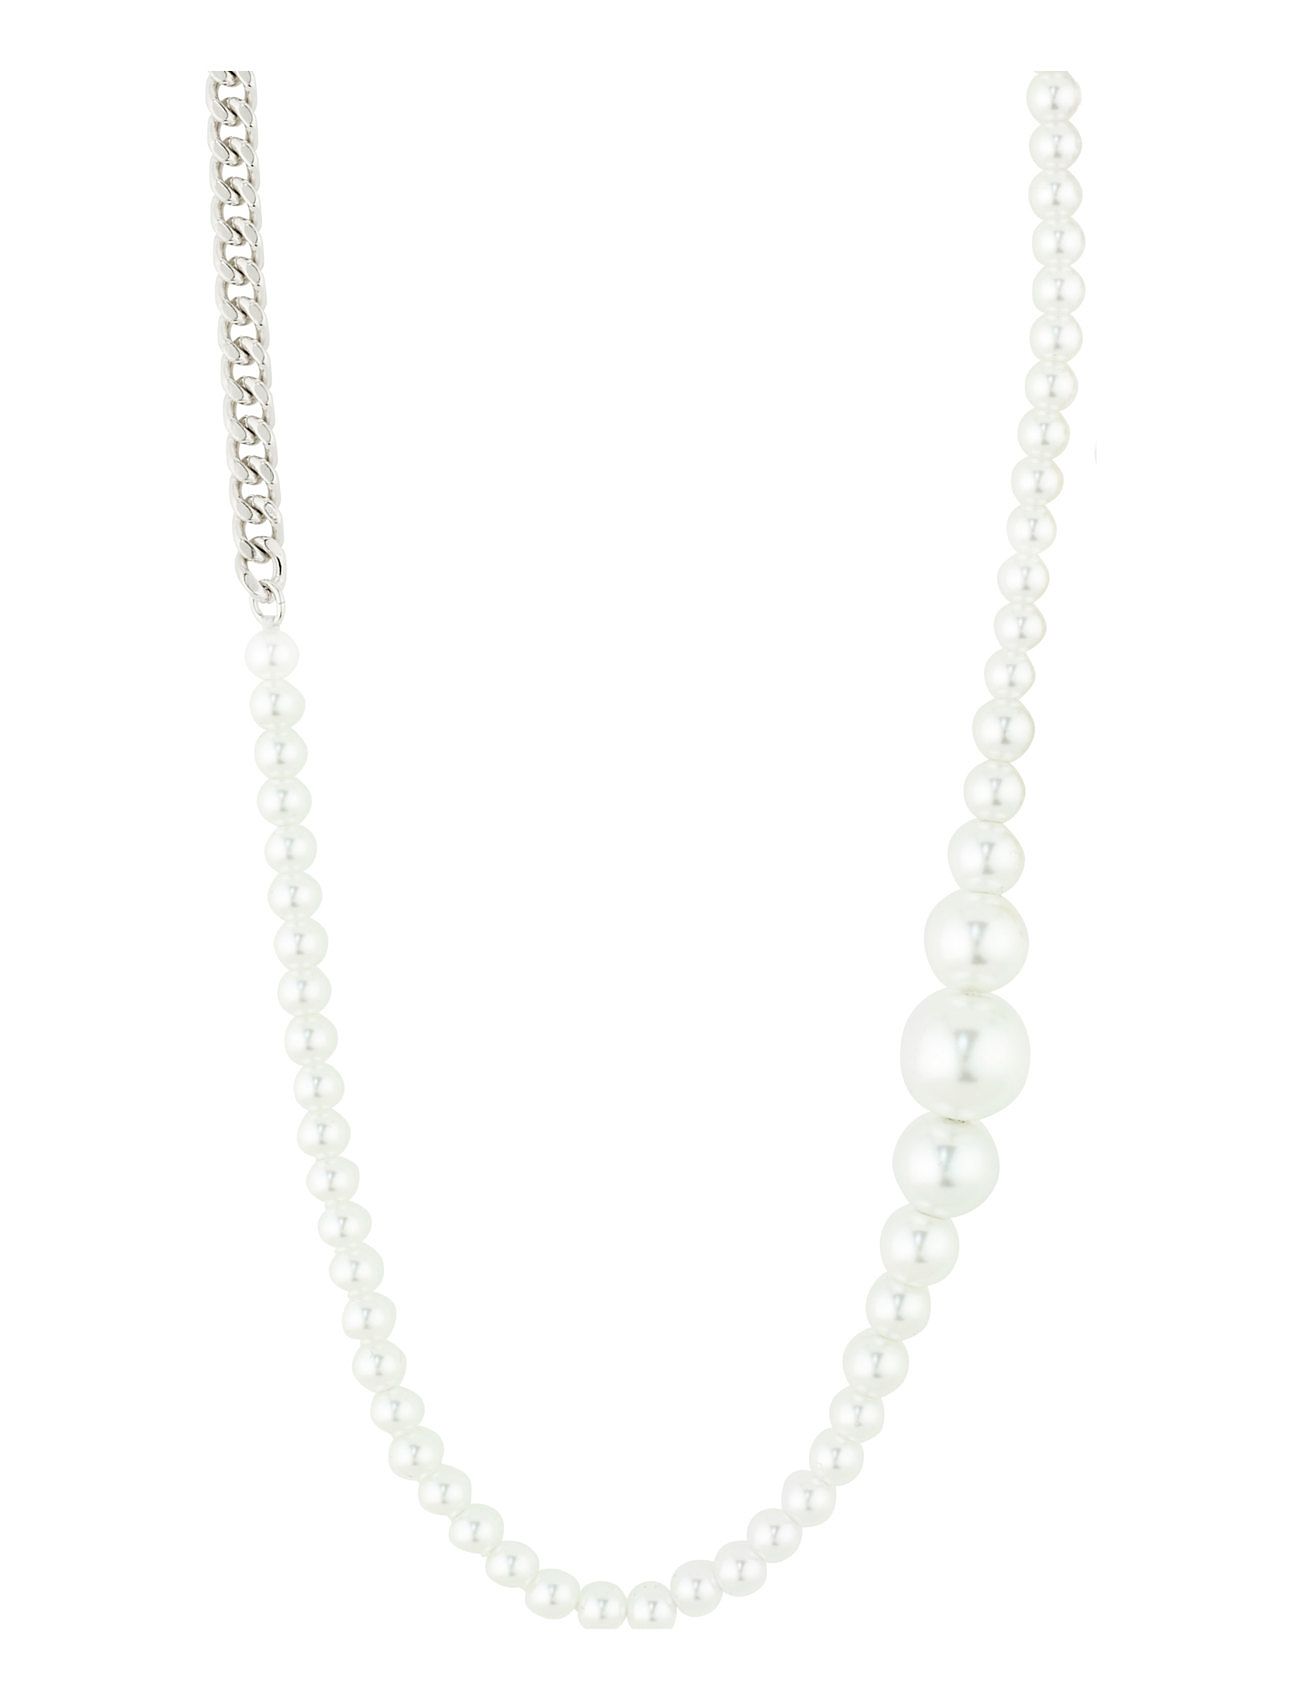 Relando Pearl Necklace Accessories Jewellery Necklaces Pearl Necklaces White Pilgrim